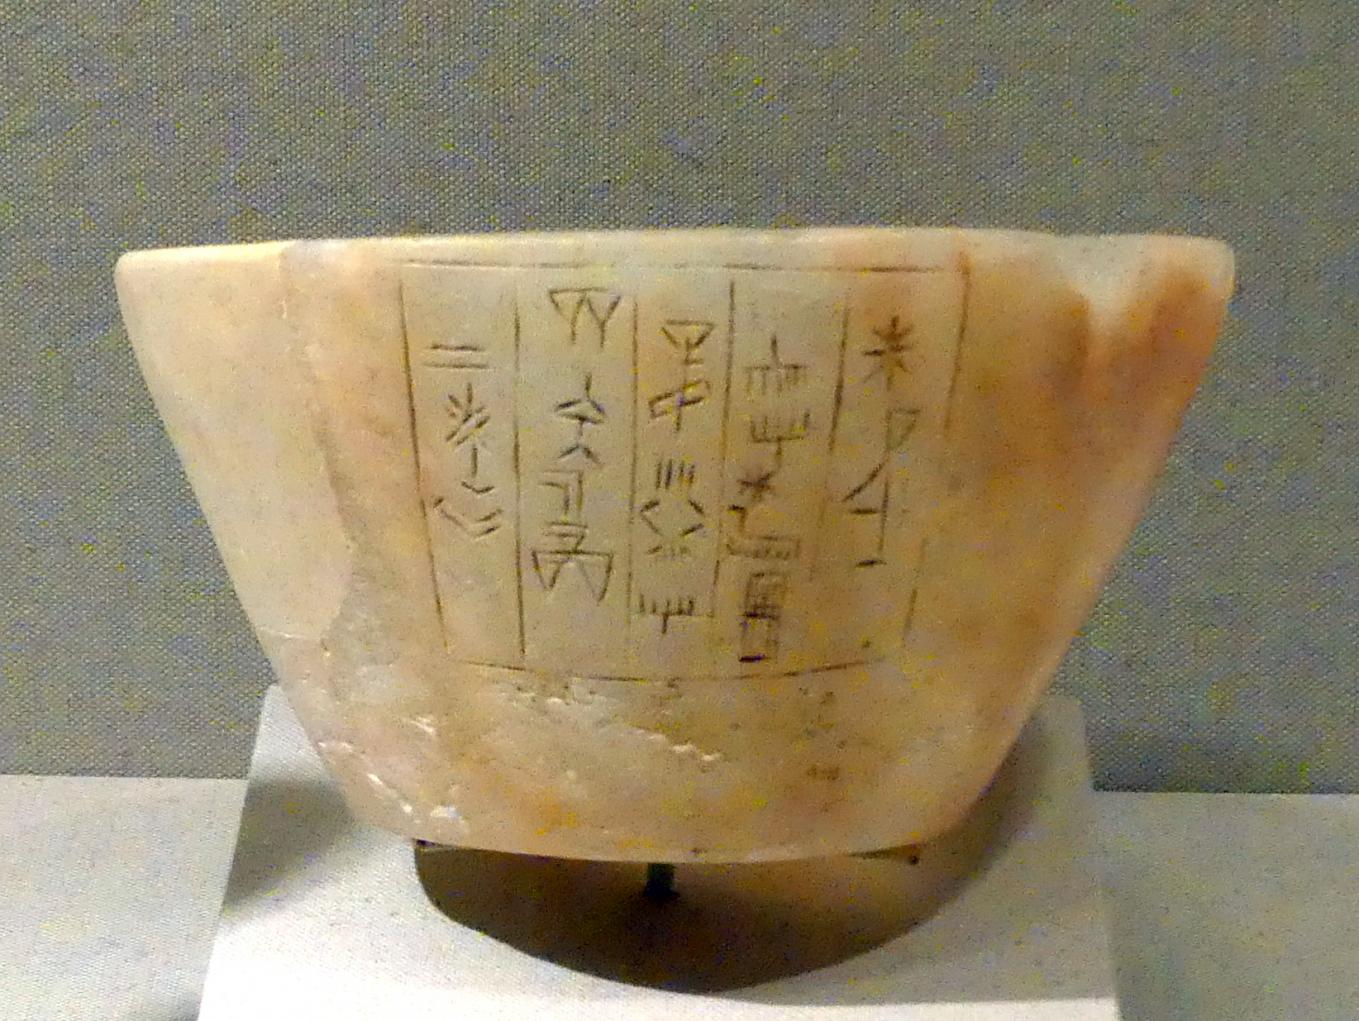 Schüssel, Frühdynastisch IIIa (Mesopotamien), 2900 - 2000 v. Chr., 2600 - 2500 v. Chr., Bild 1/2